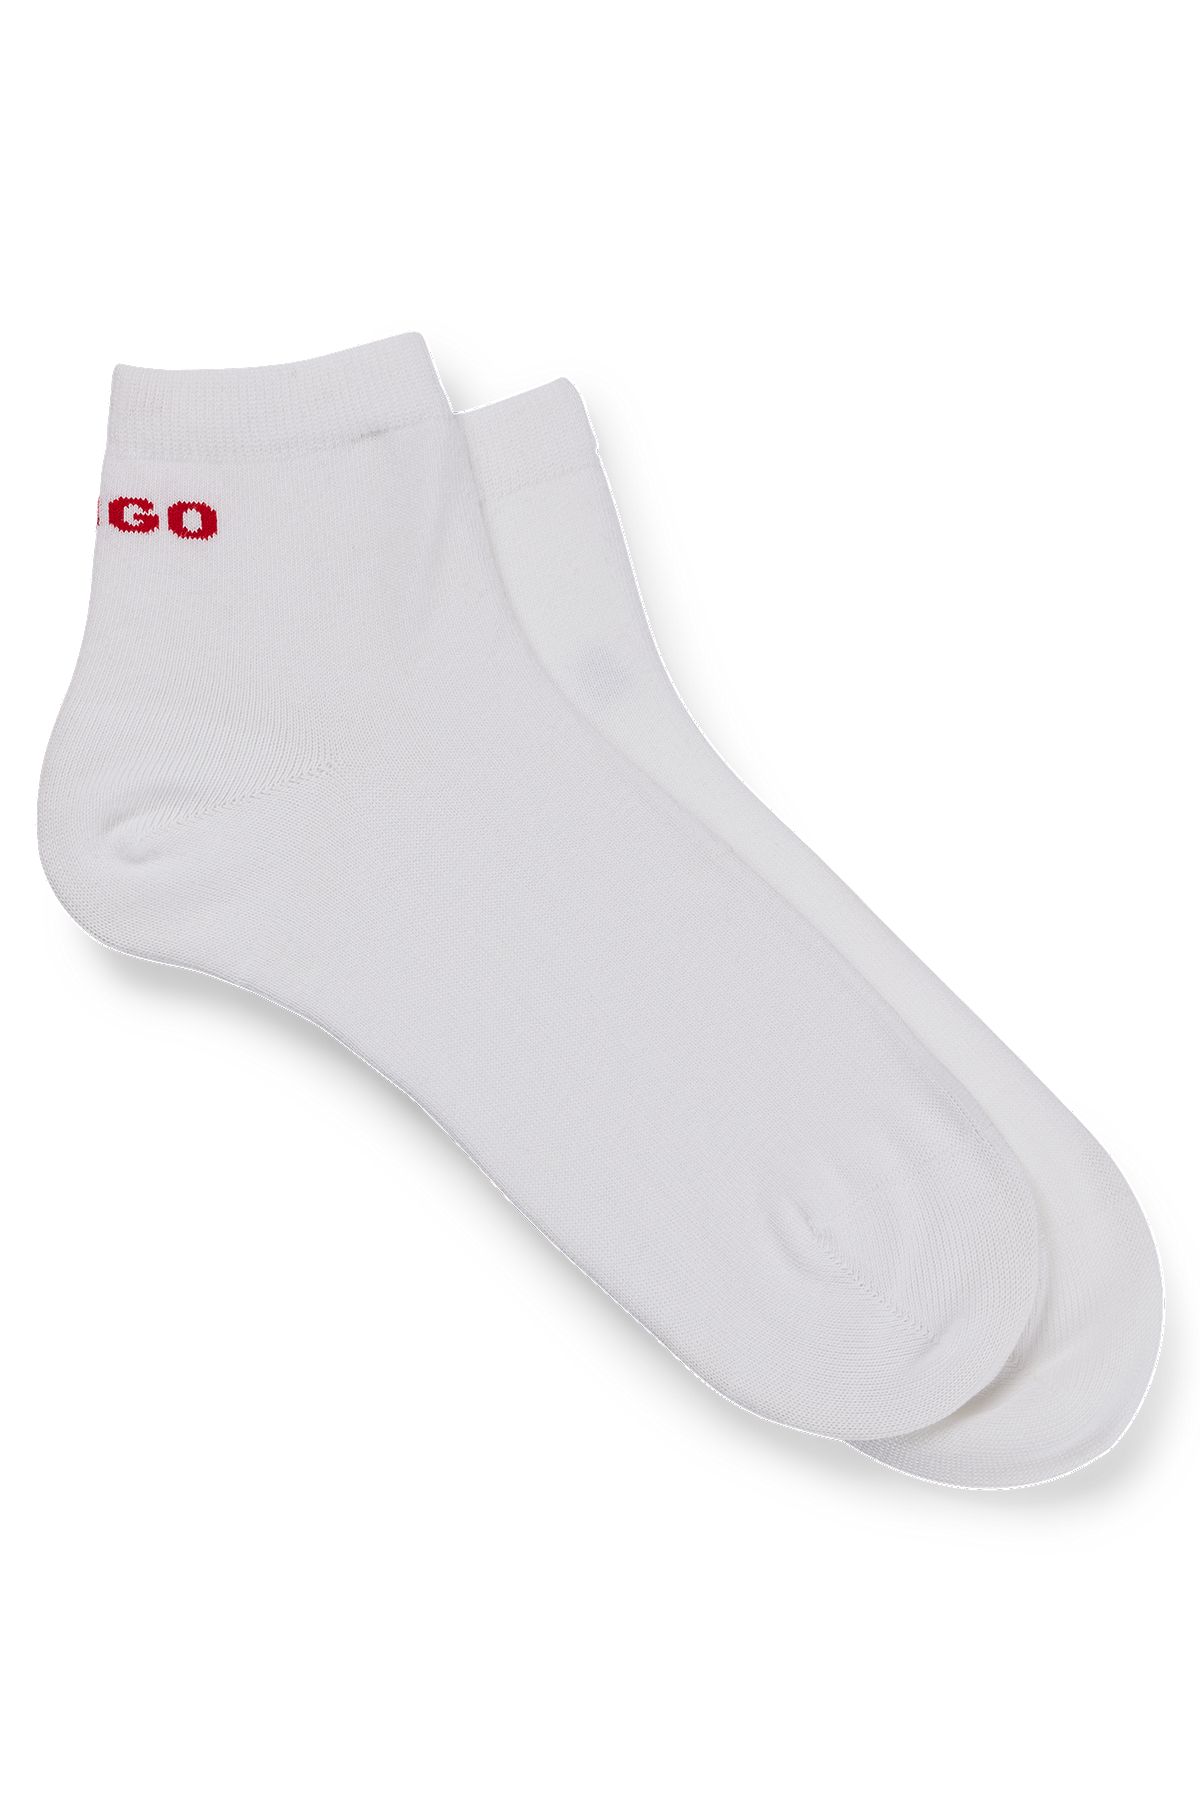 Zweier-Pack kurze Socken mit Logos, Weiß